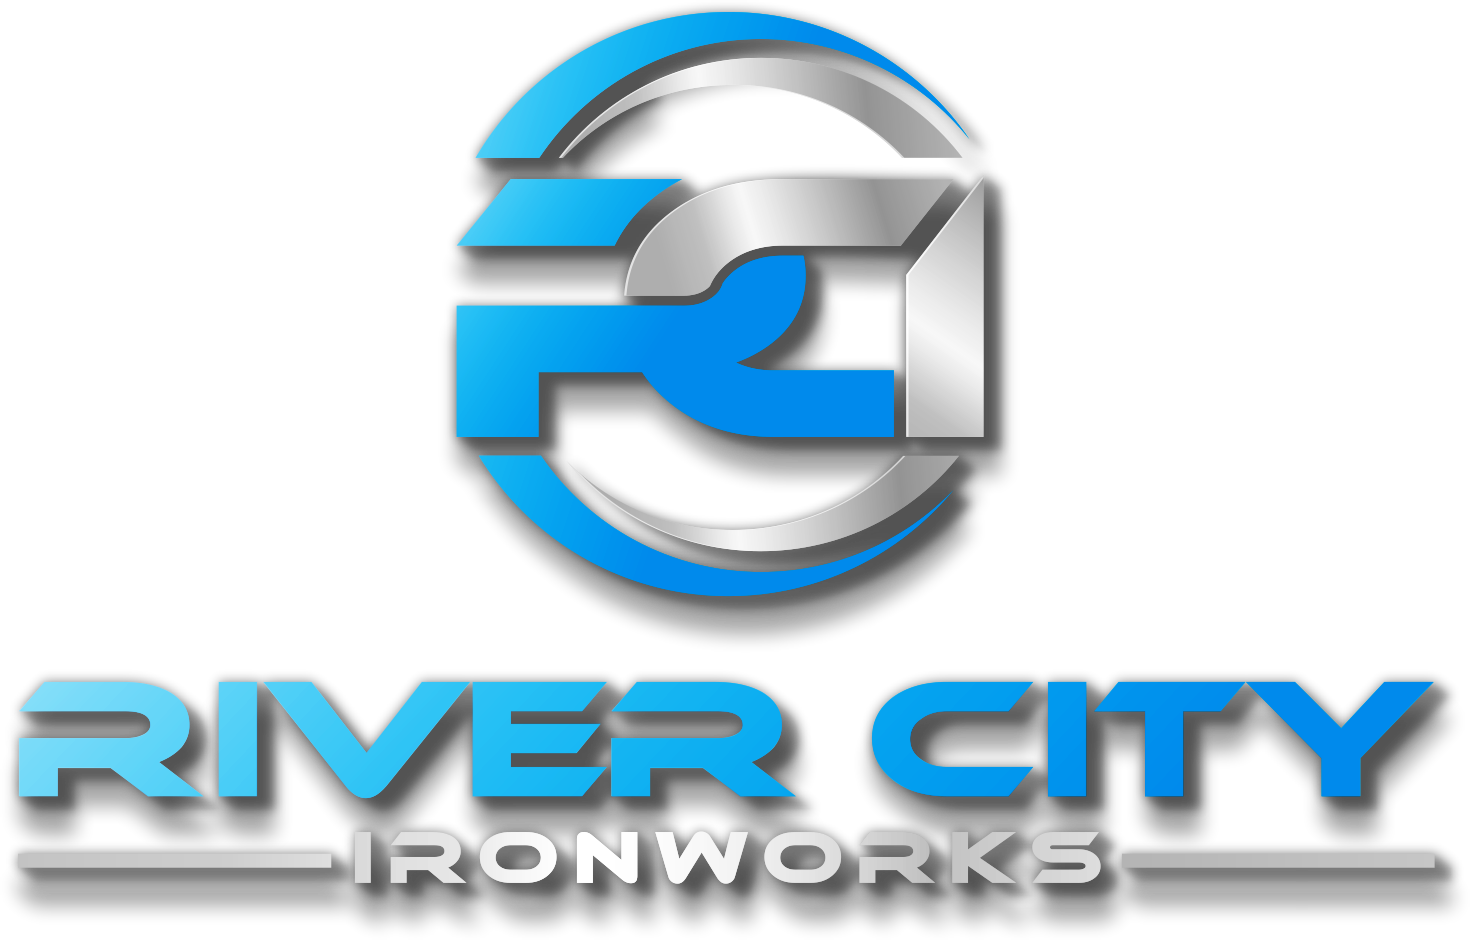 River City Ironworks